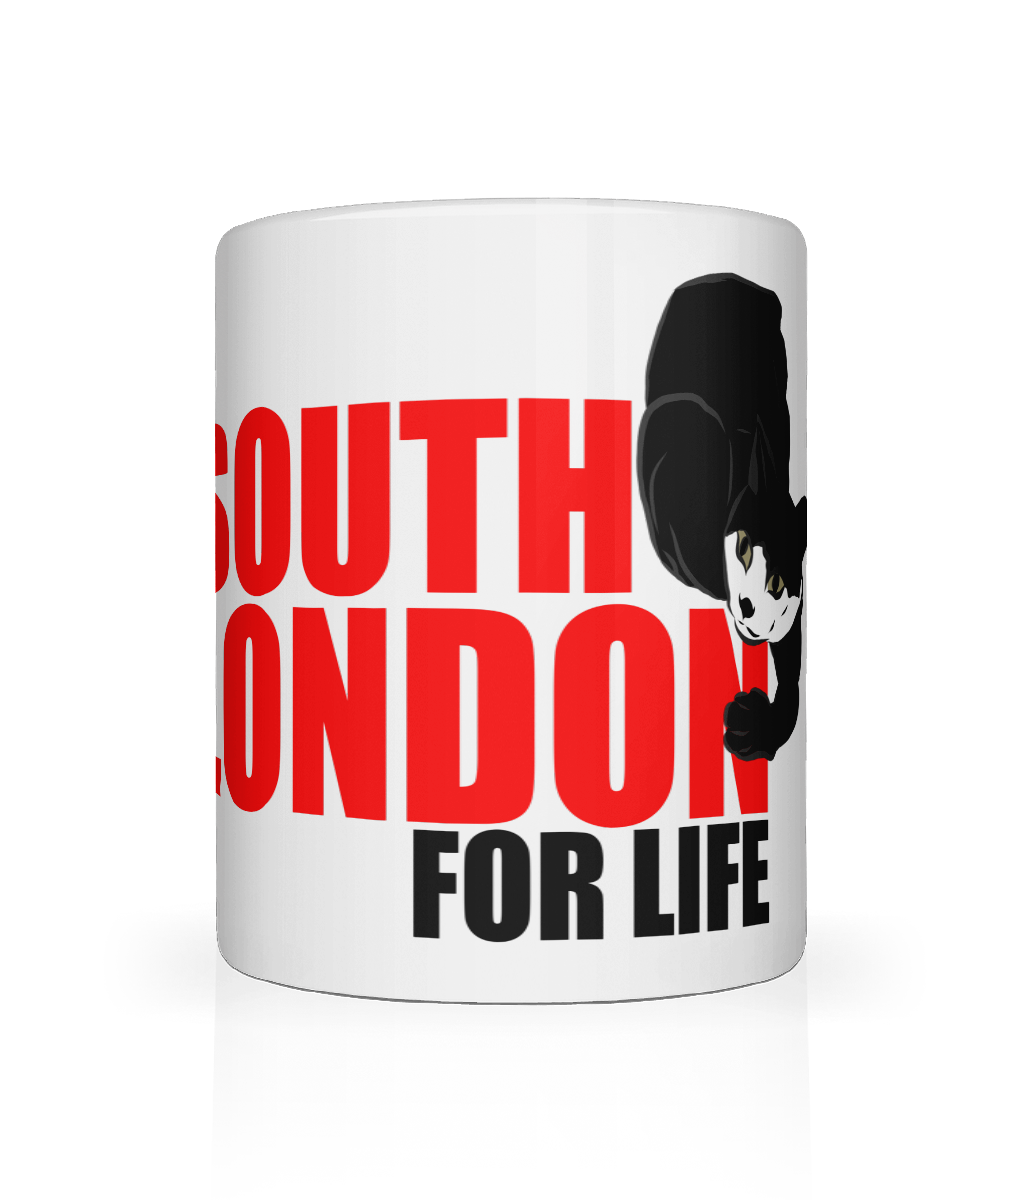 South London for Life Cat Mug